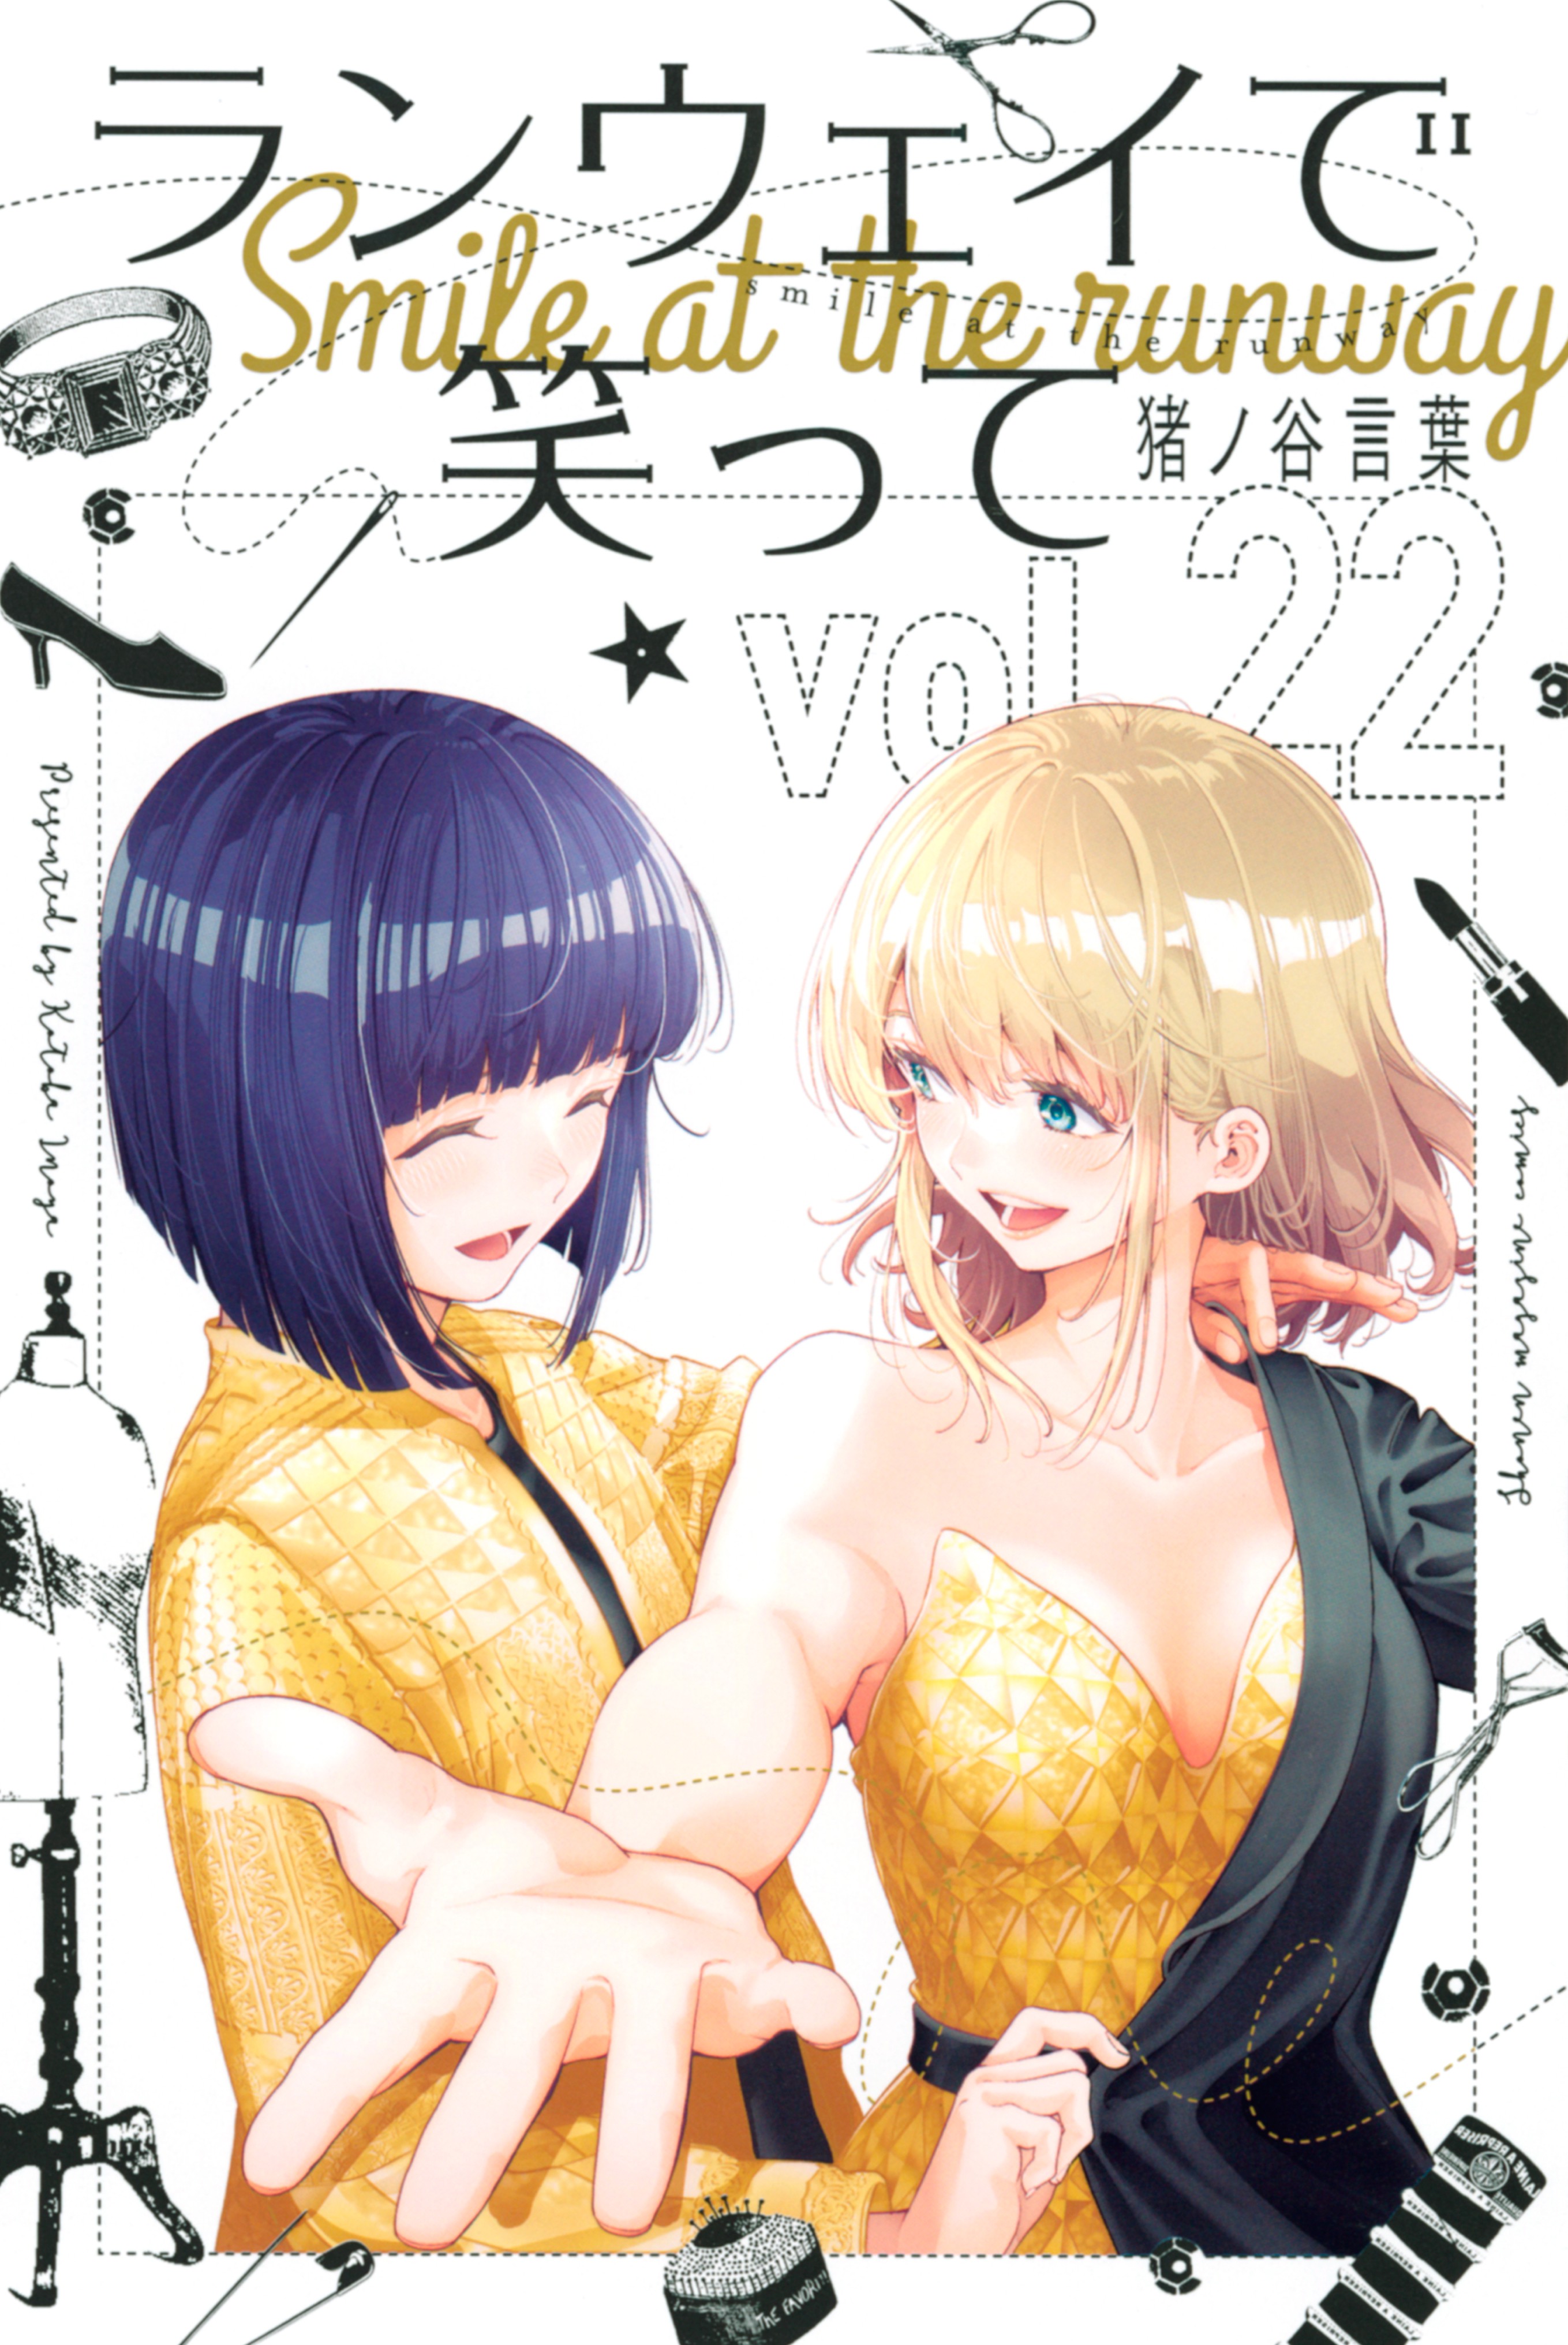 Runway de Waratte Manga - Chapter 102 - Manga Rock Team - Read